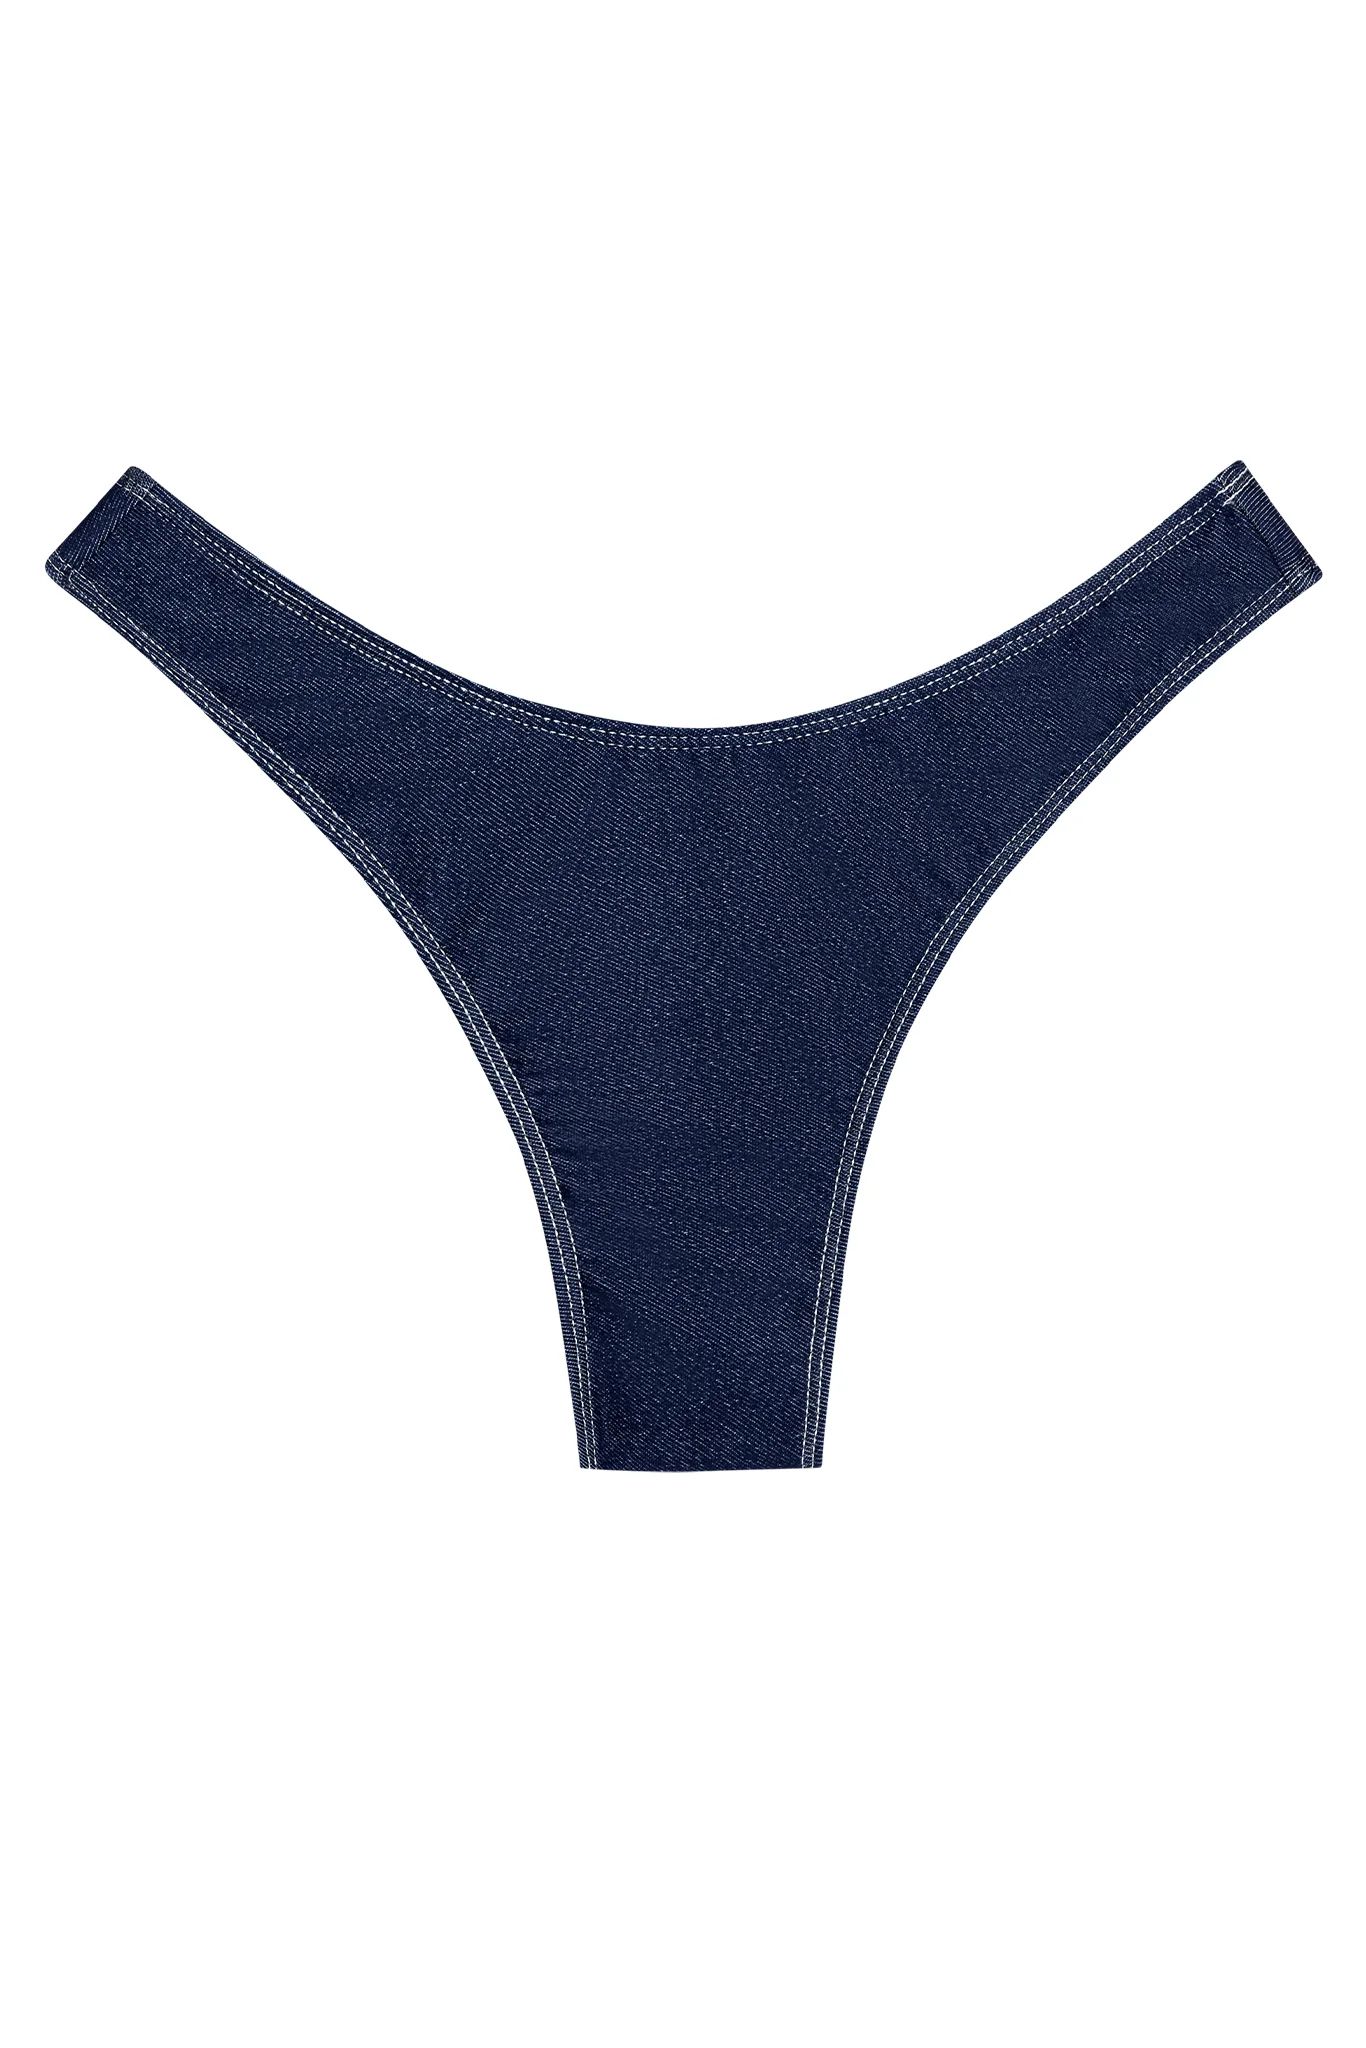 Byron Bottom - Blue Denim | Monday Swimwear